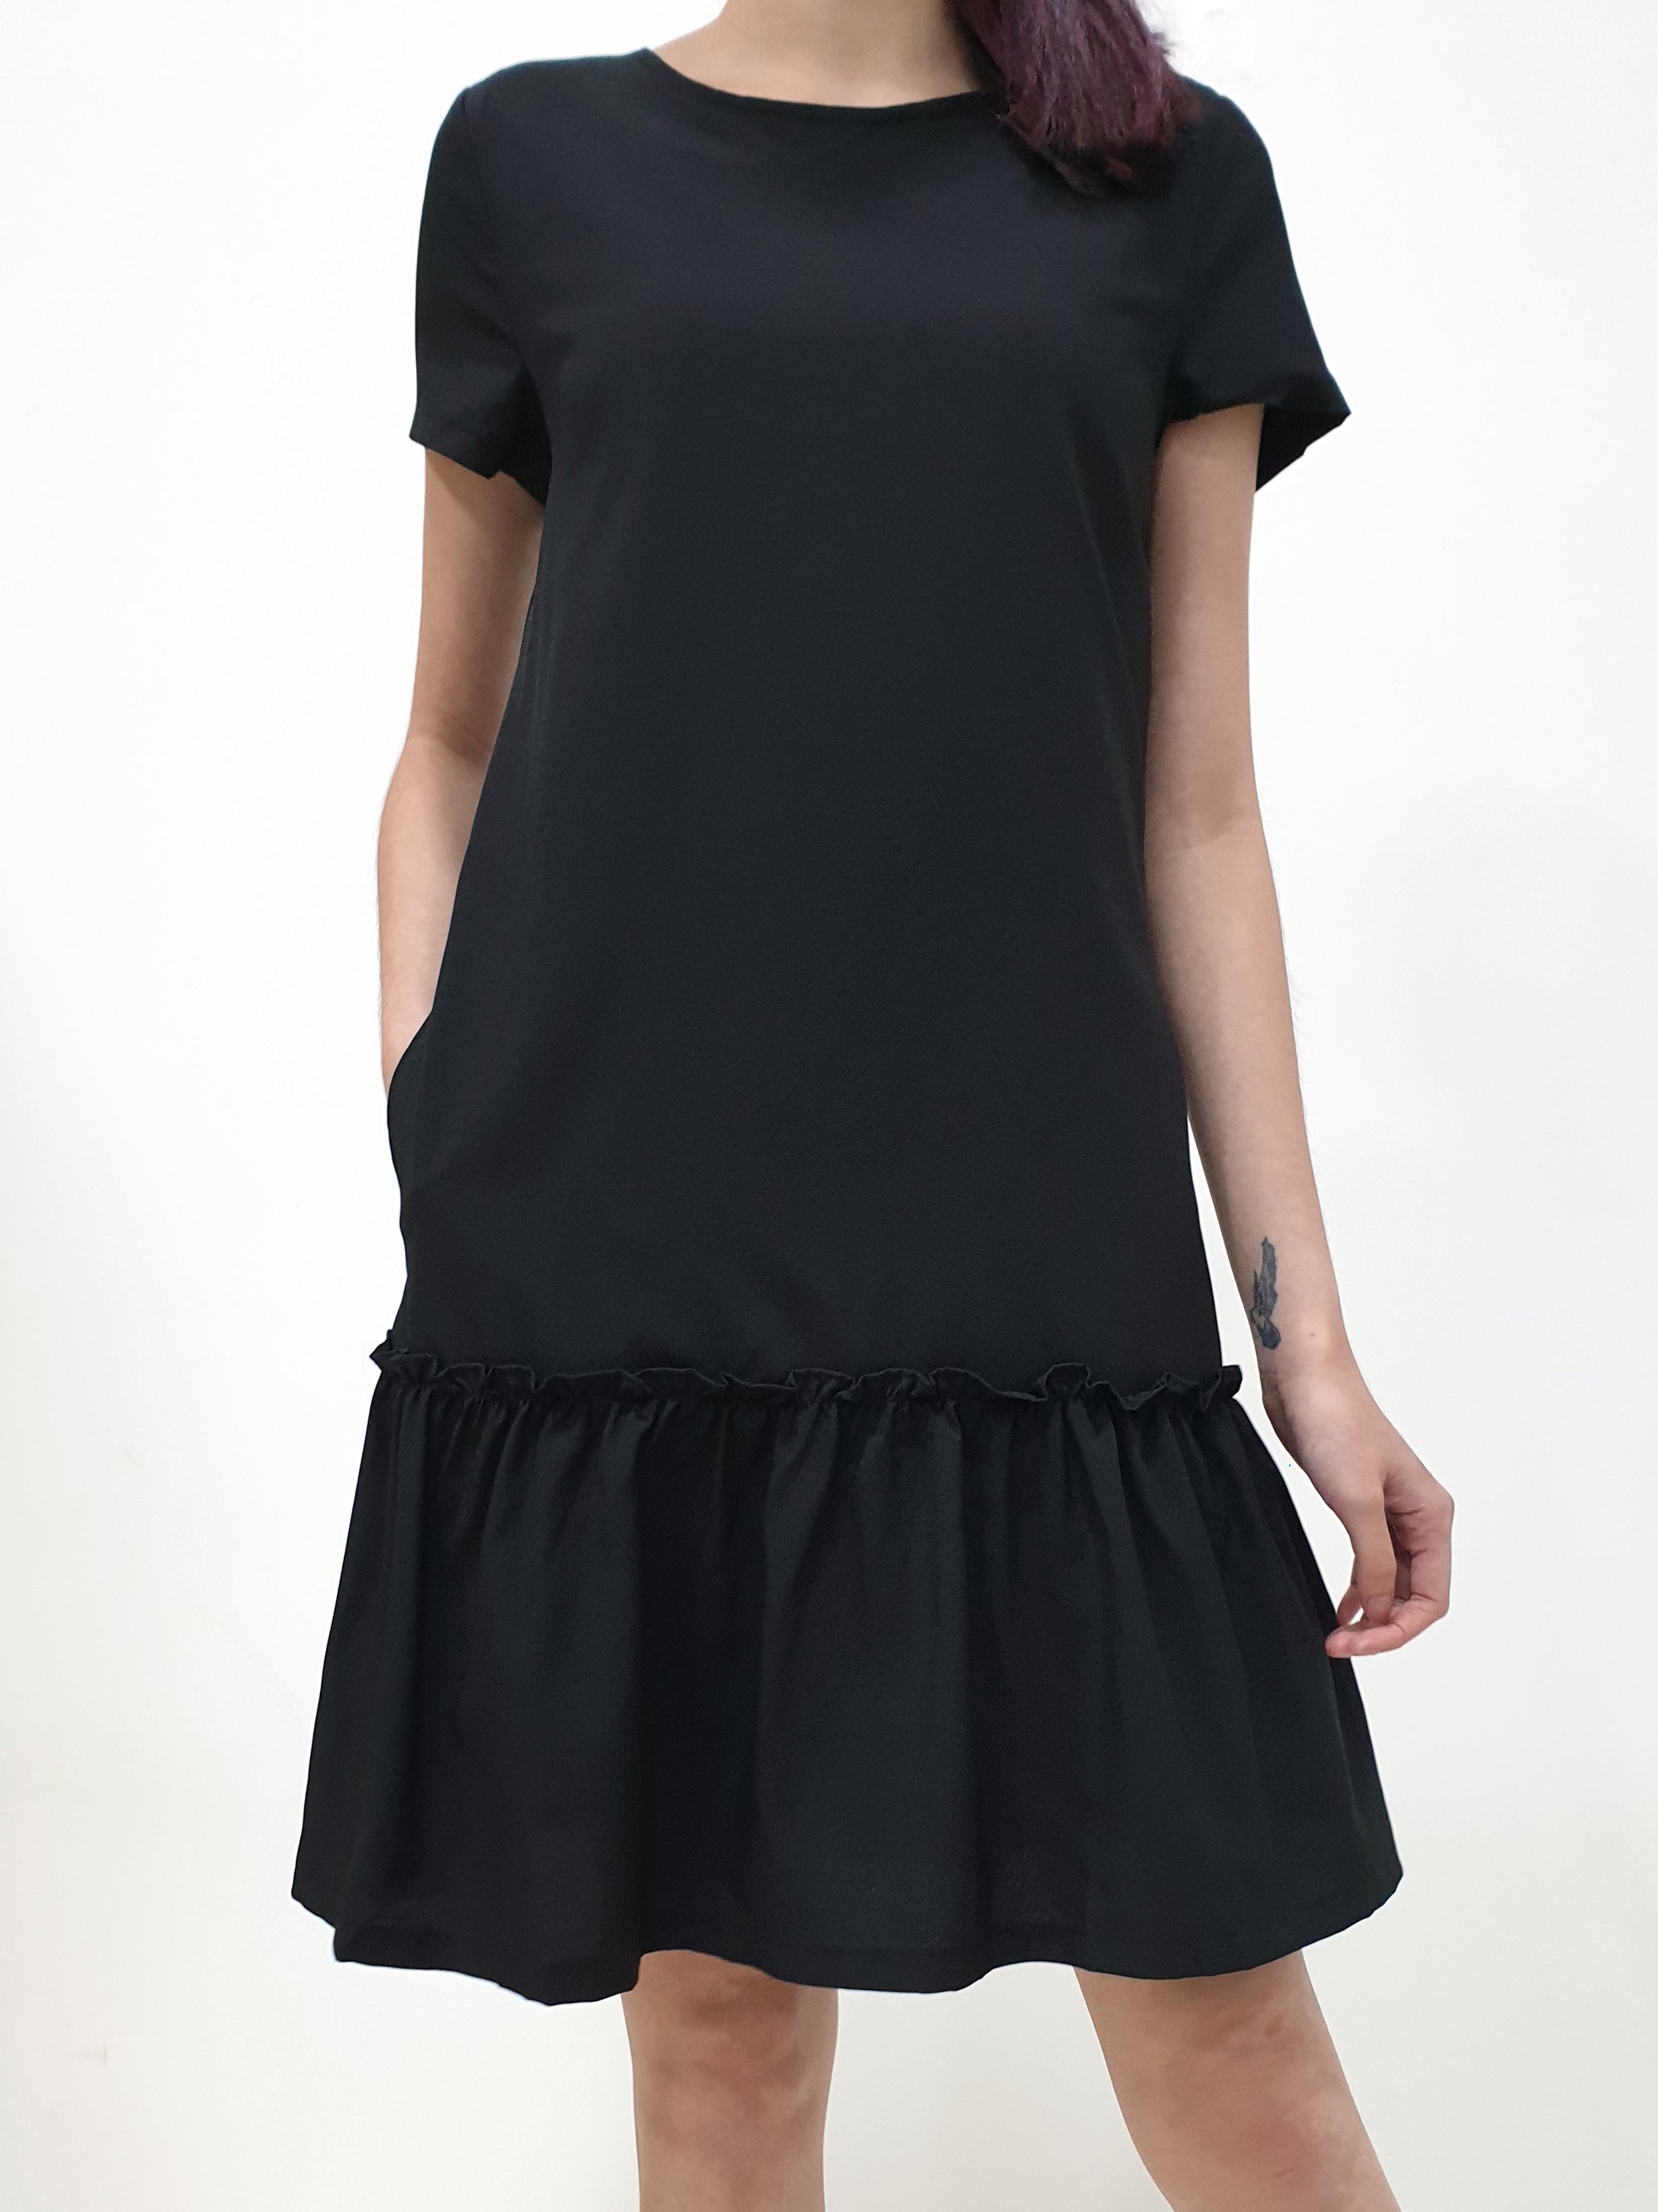 Sleeved Gathered Hem Dress - Black (Non-returnable) - Ferlicious